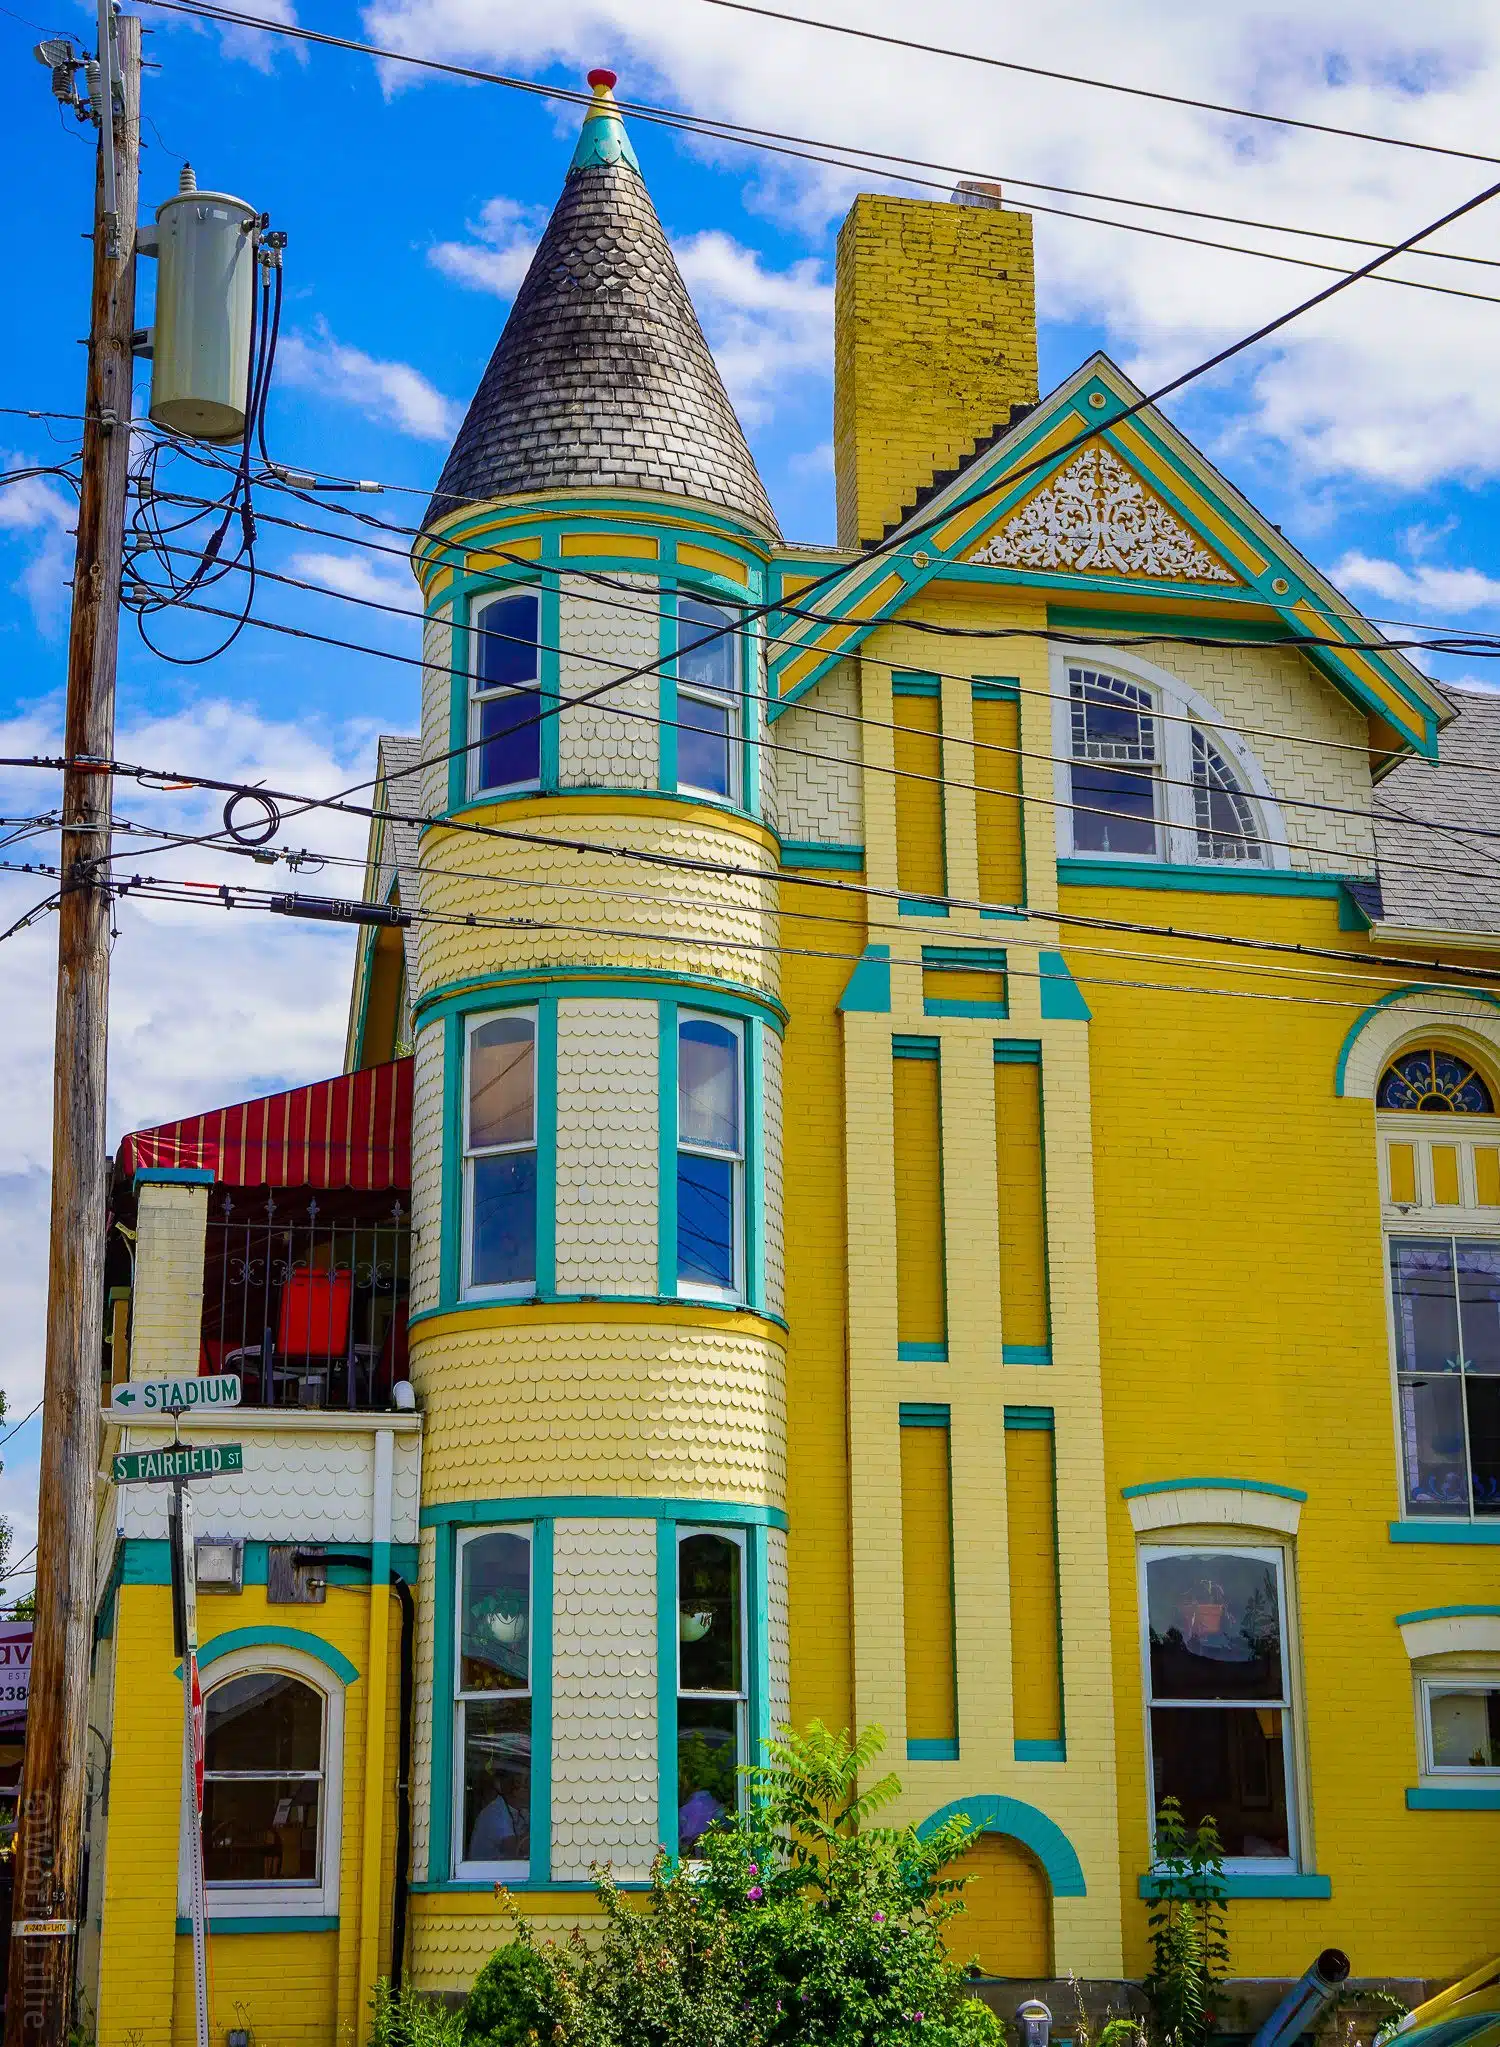 Ligonier's historic yellow building.